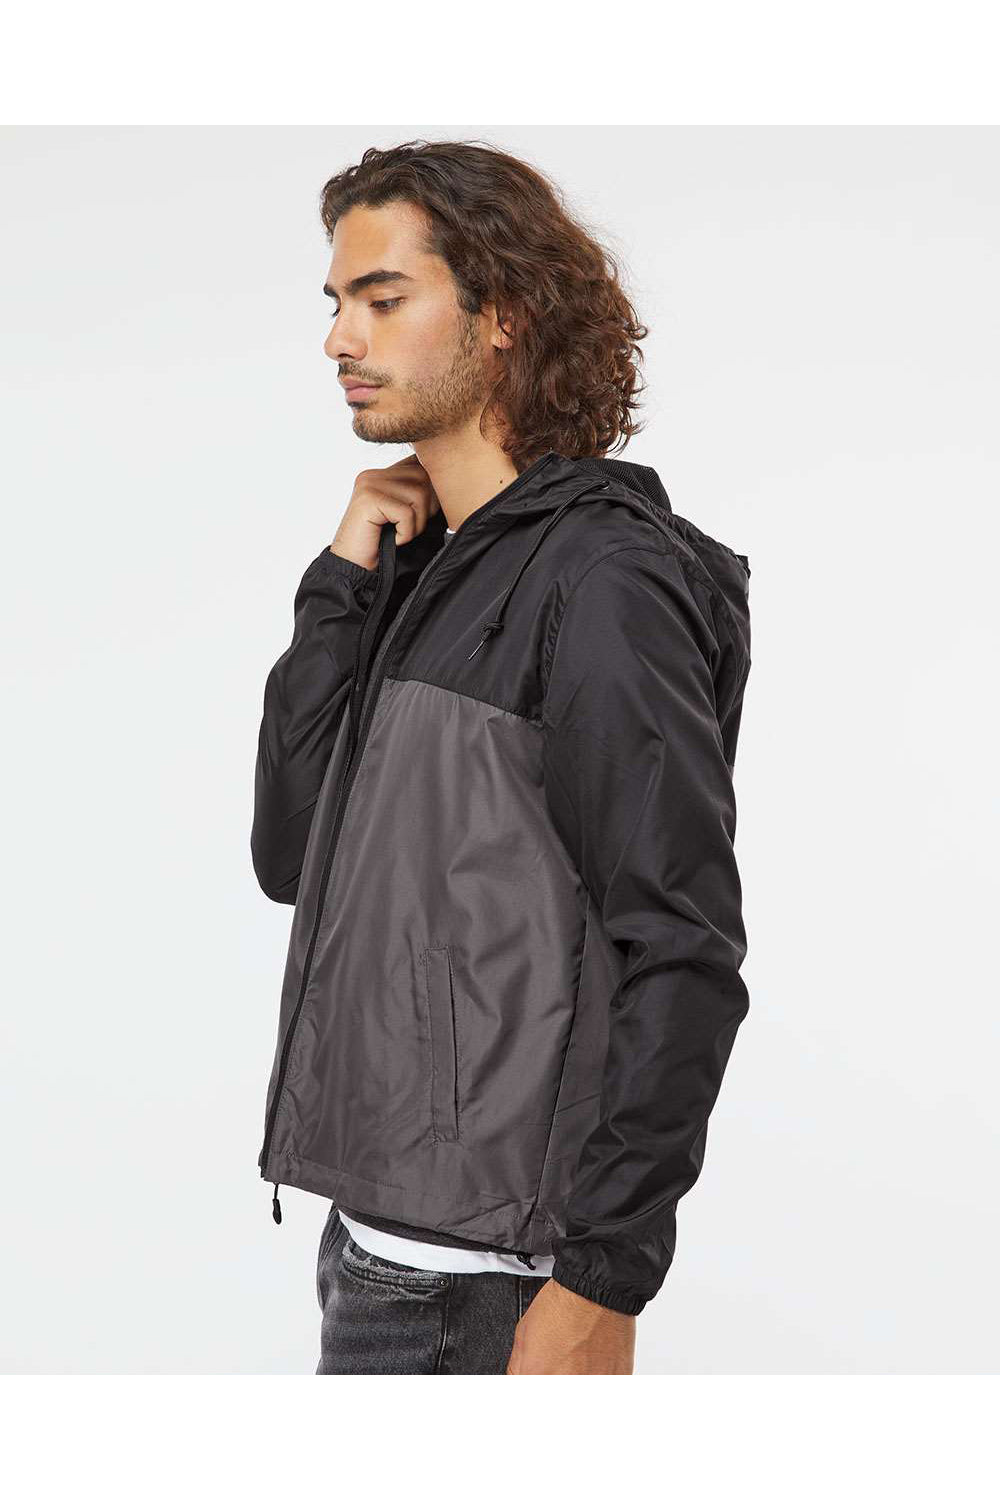 Independent Trading Co. EXP54LWZ Mens Full Zip Windbreaker Hooded Jacket Black/Graphite Grey Model Side